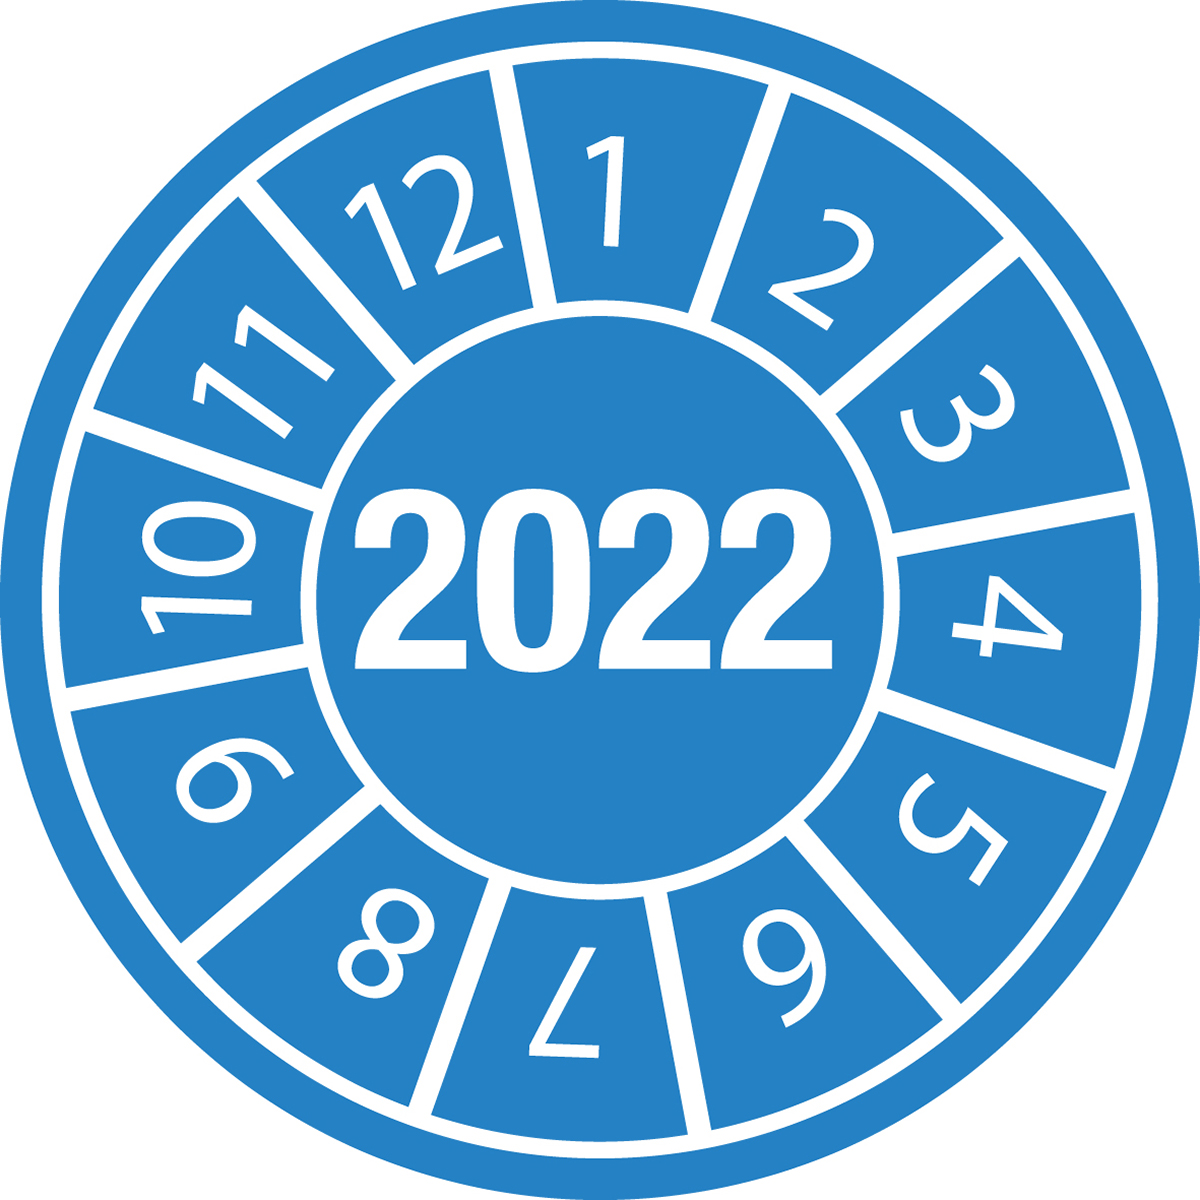 BRADY DATE 2022 DIA 10 B-429 DATE INSPECTION LBLS B-429 2022 - DIA 10 834139